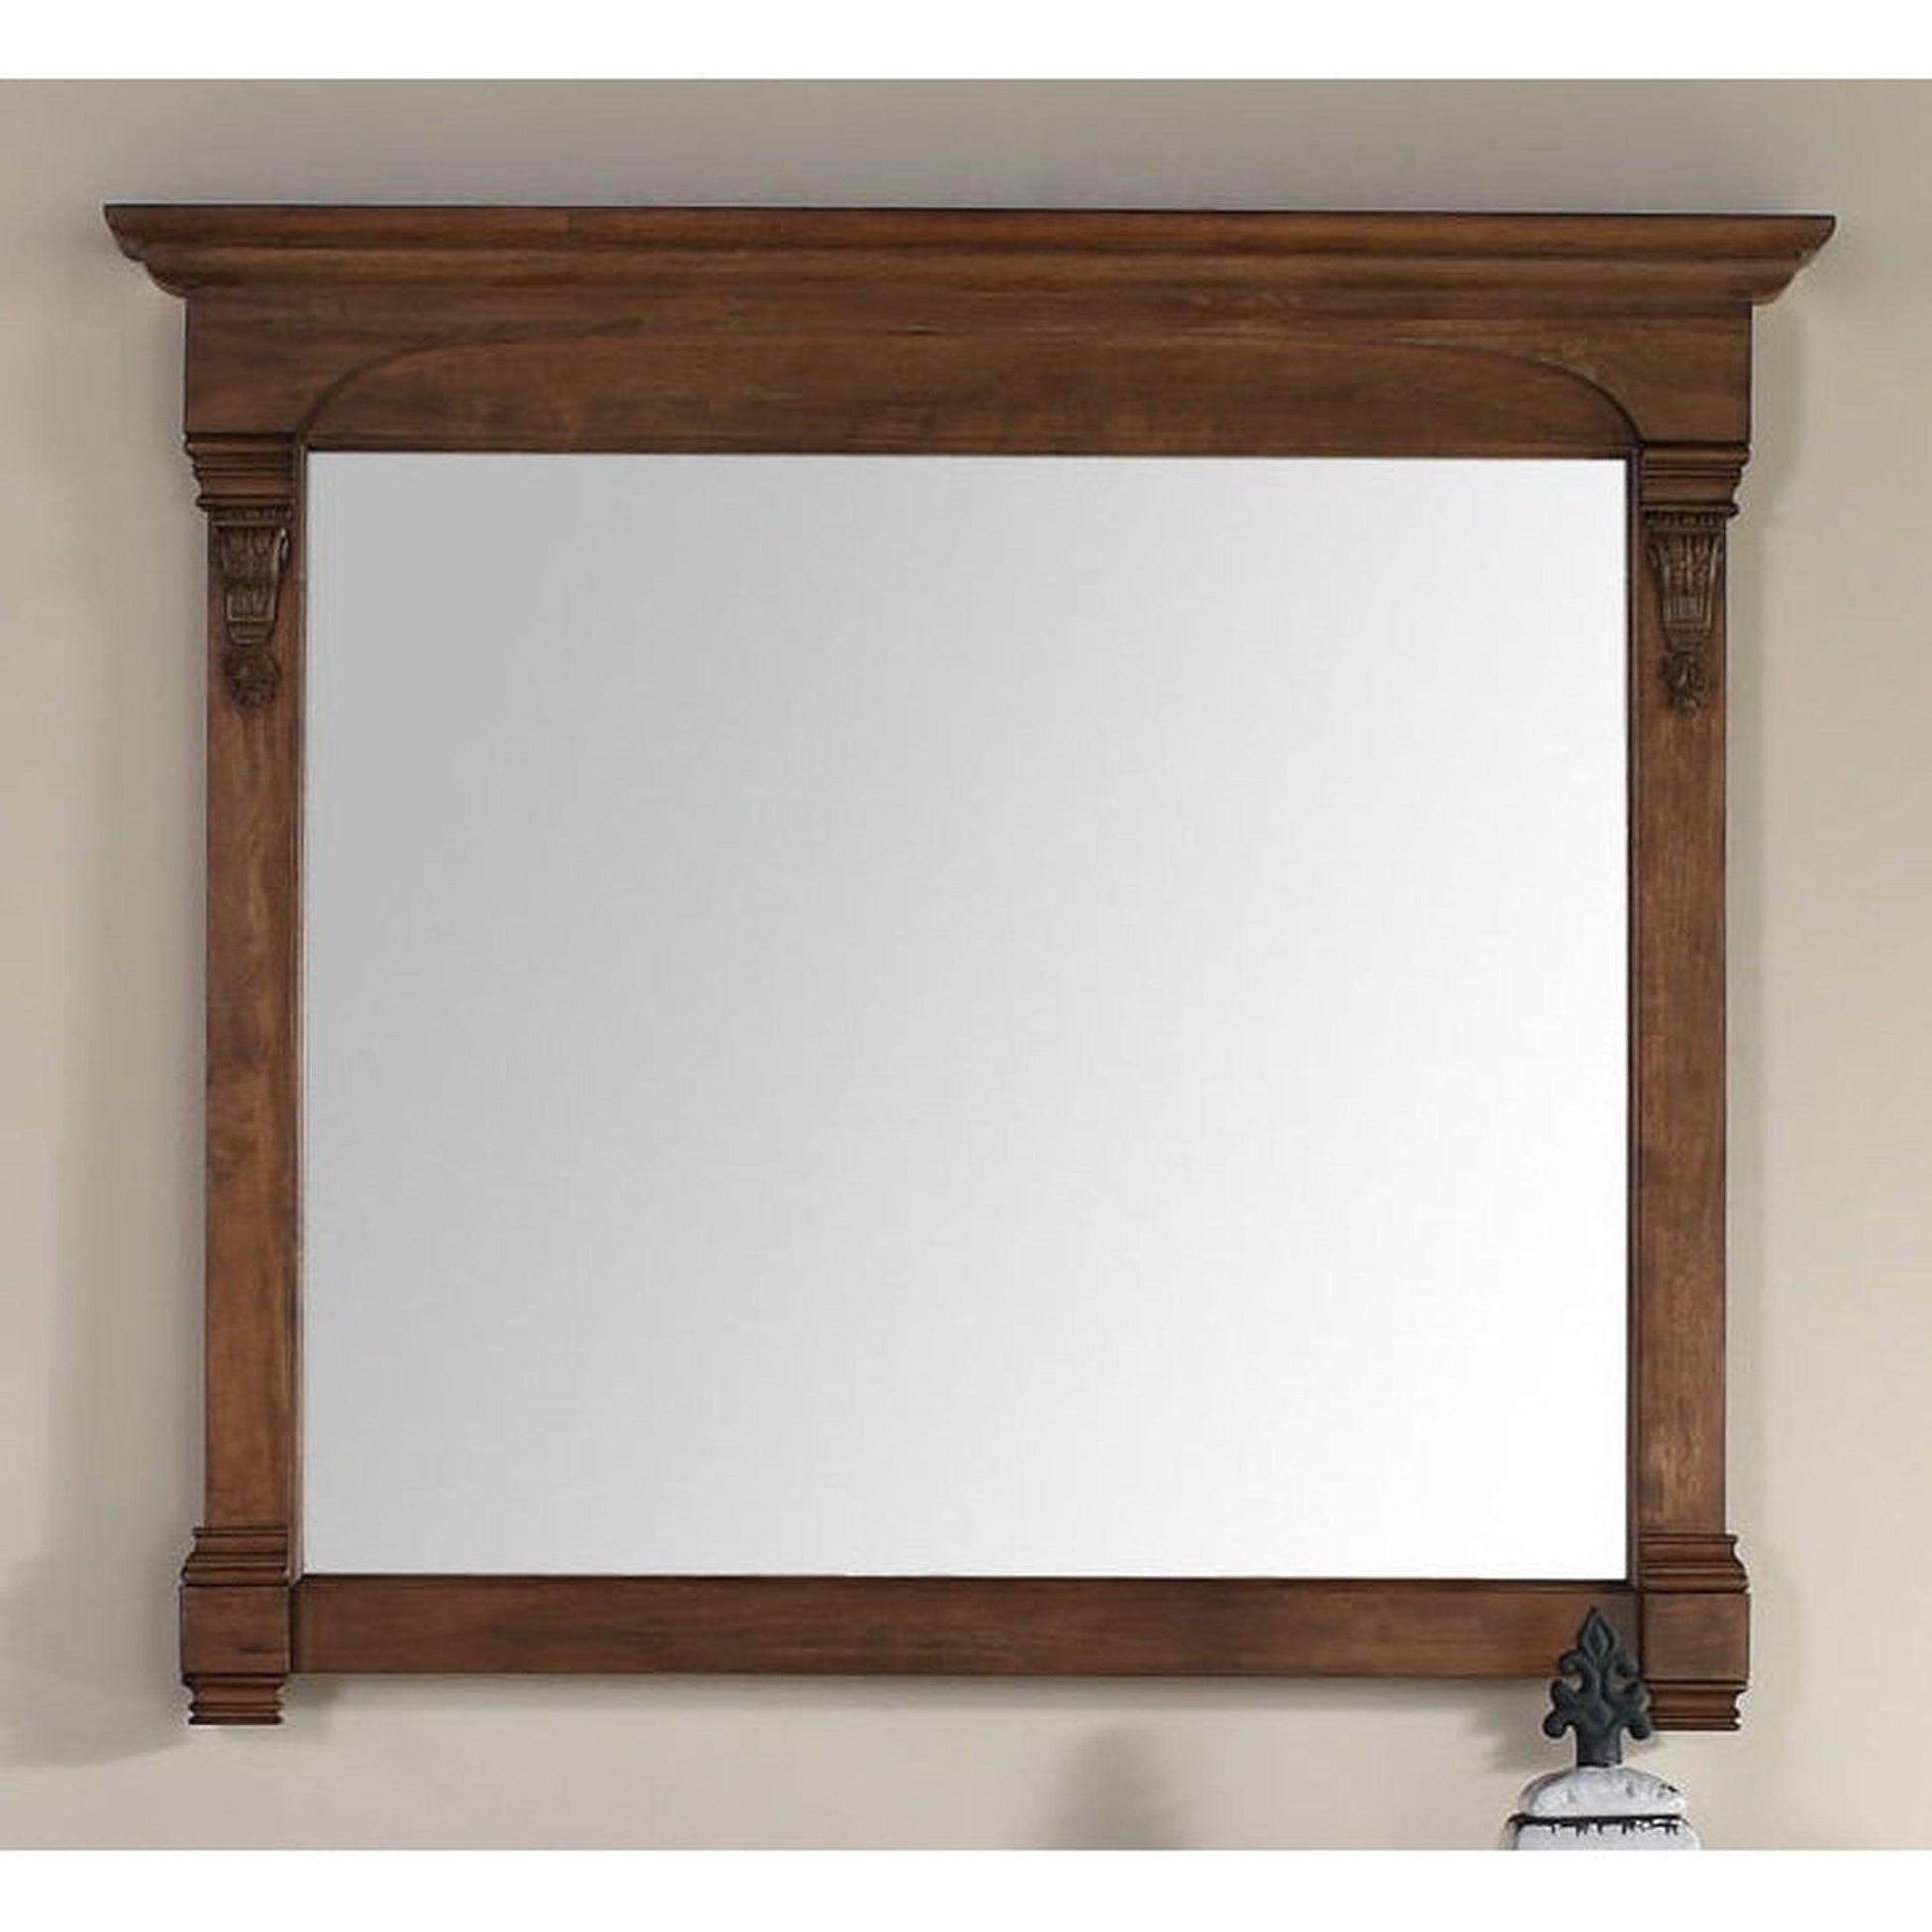 James Martin Brookfield 47" x 41" Country Oak Rectangular Mirror